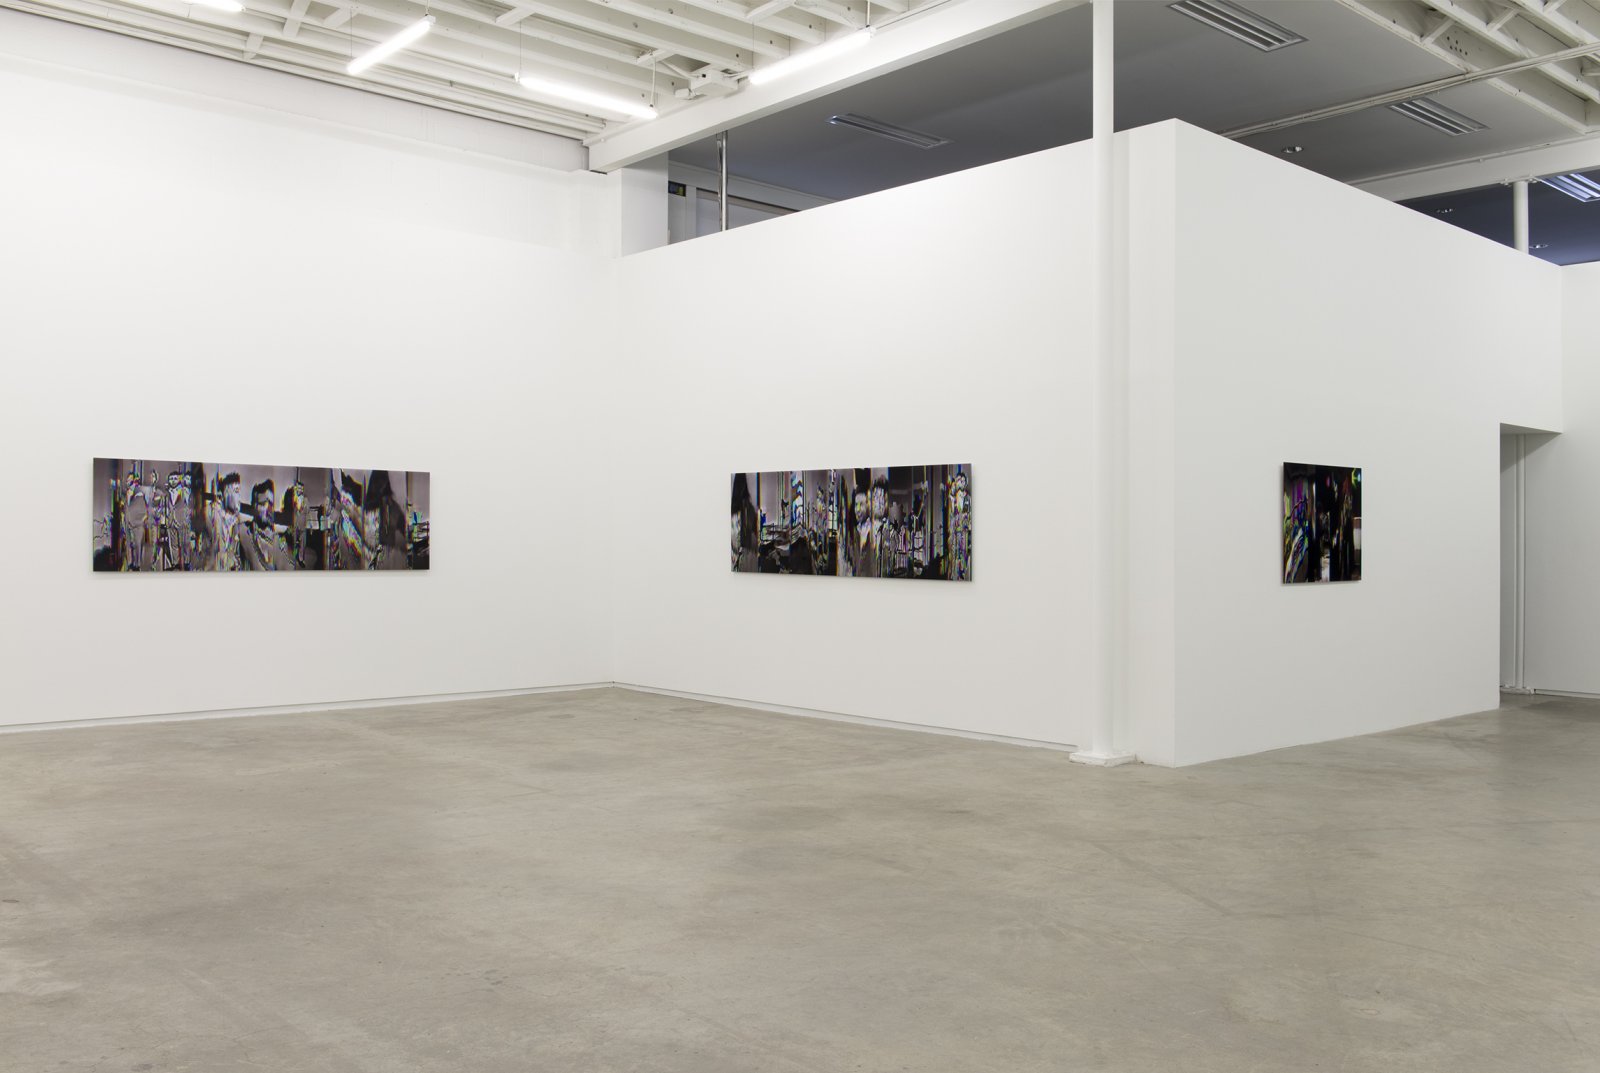 Raymond Boisjoly, installation view,​ Intervals, Catriona Jeffries, 2013 by Raymond Boisjoly